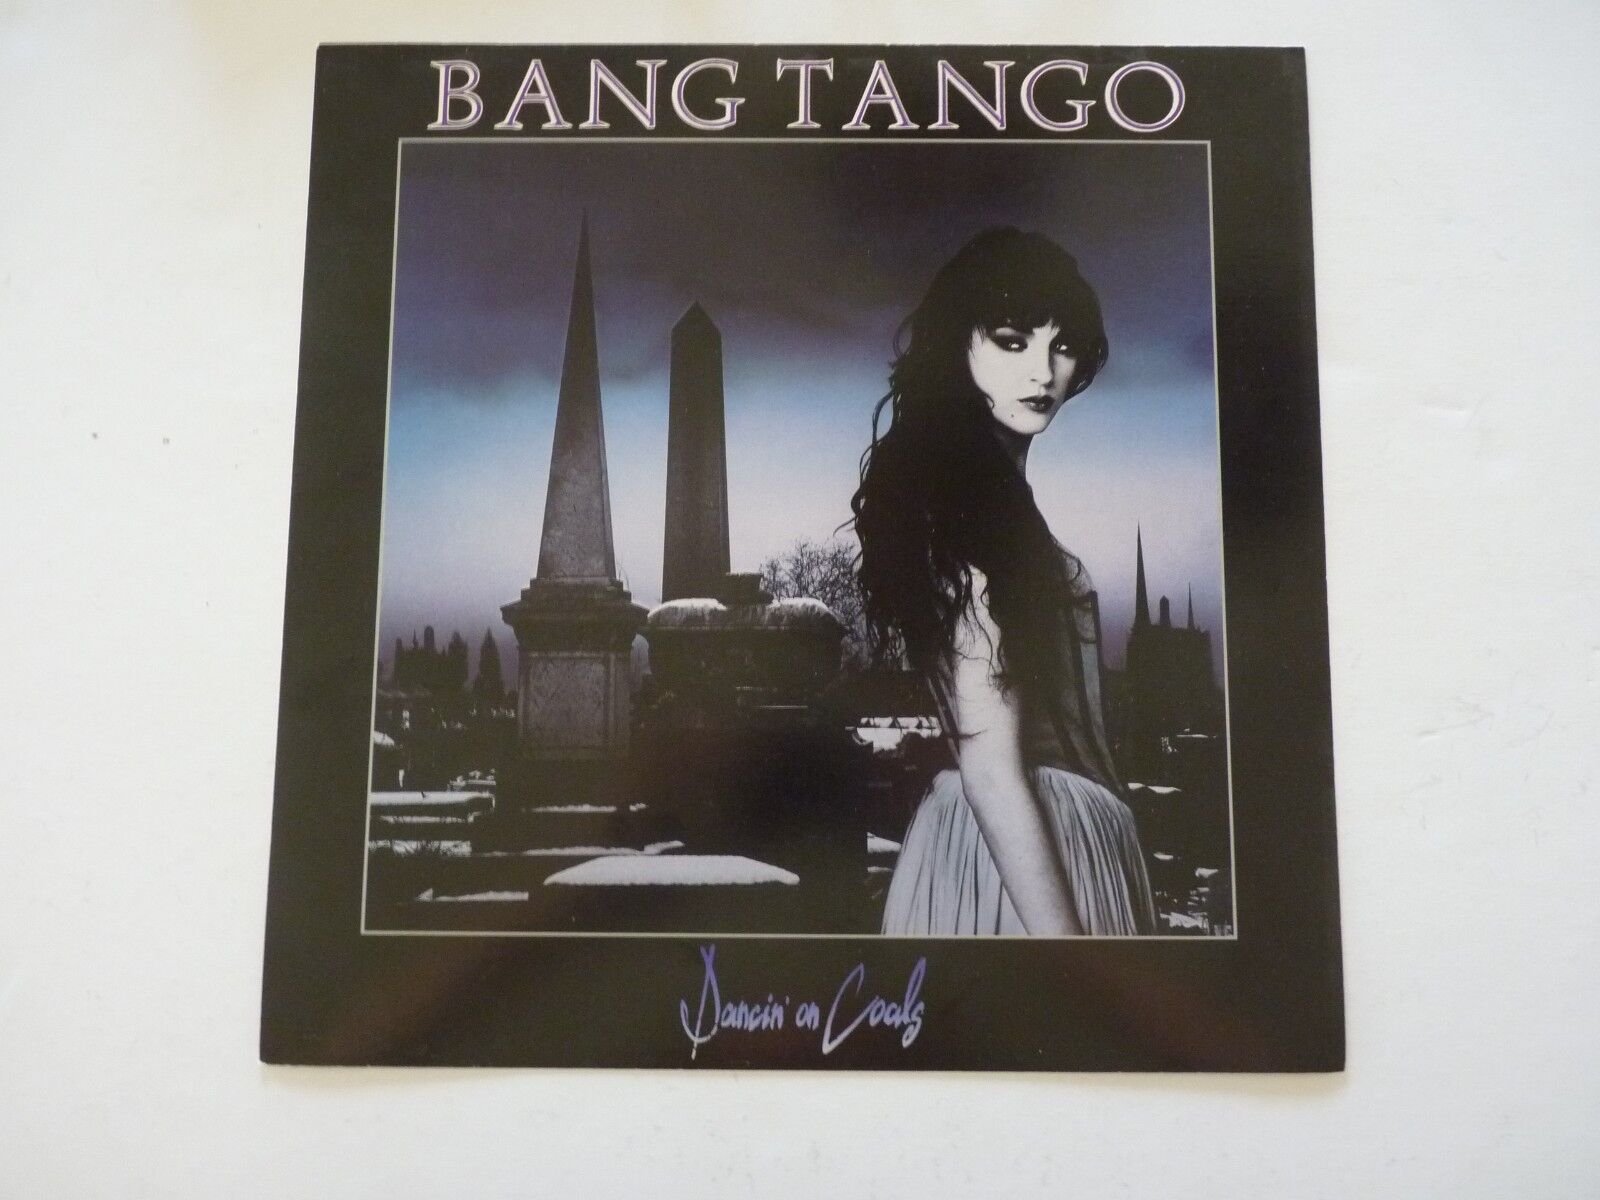 Bang Tango Dancin' On Coals Promo LP Record Photo Poster painting Flat 12x12 Poster